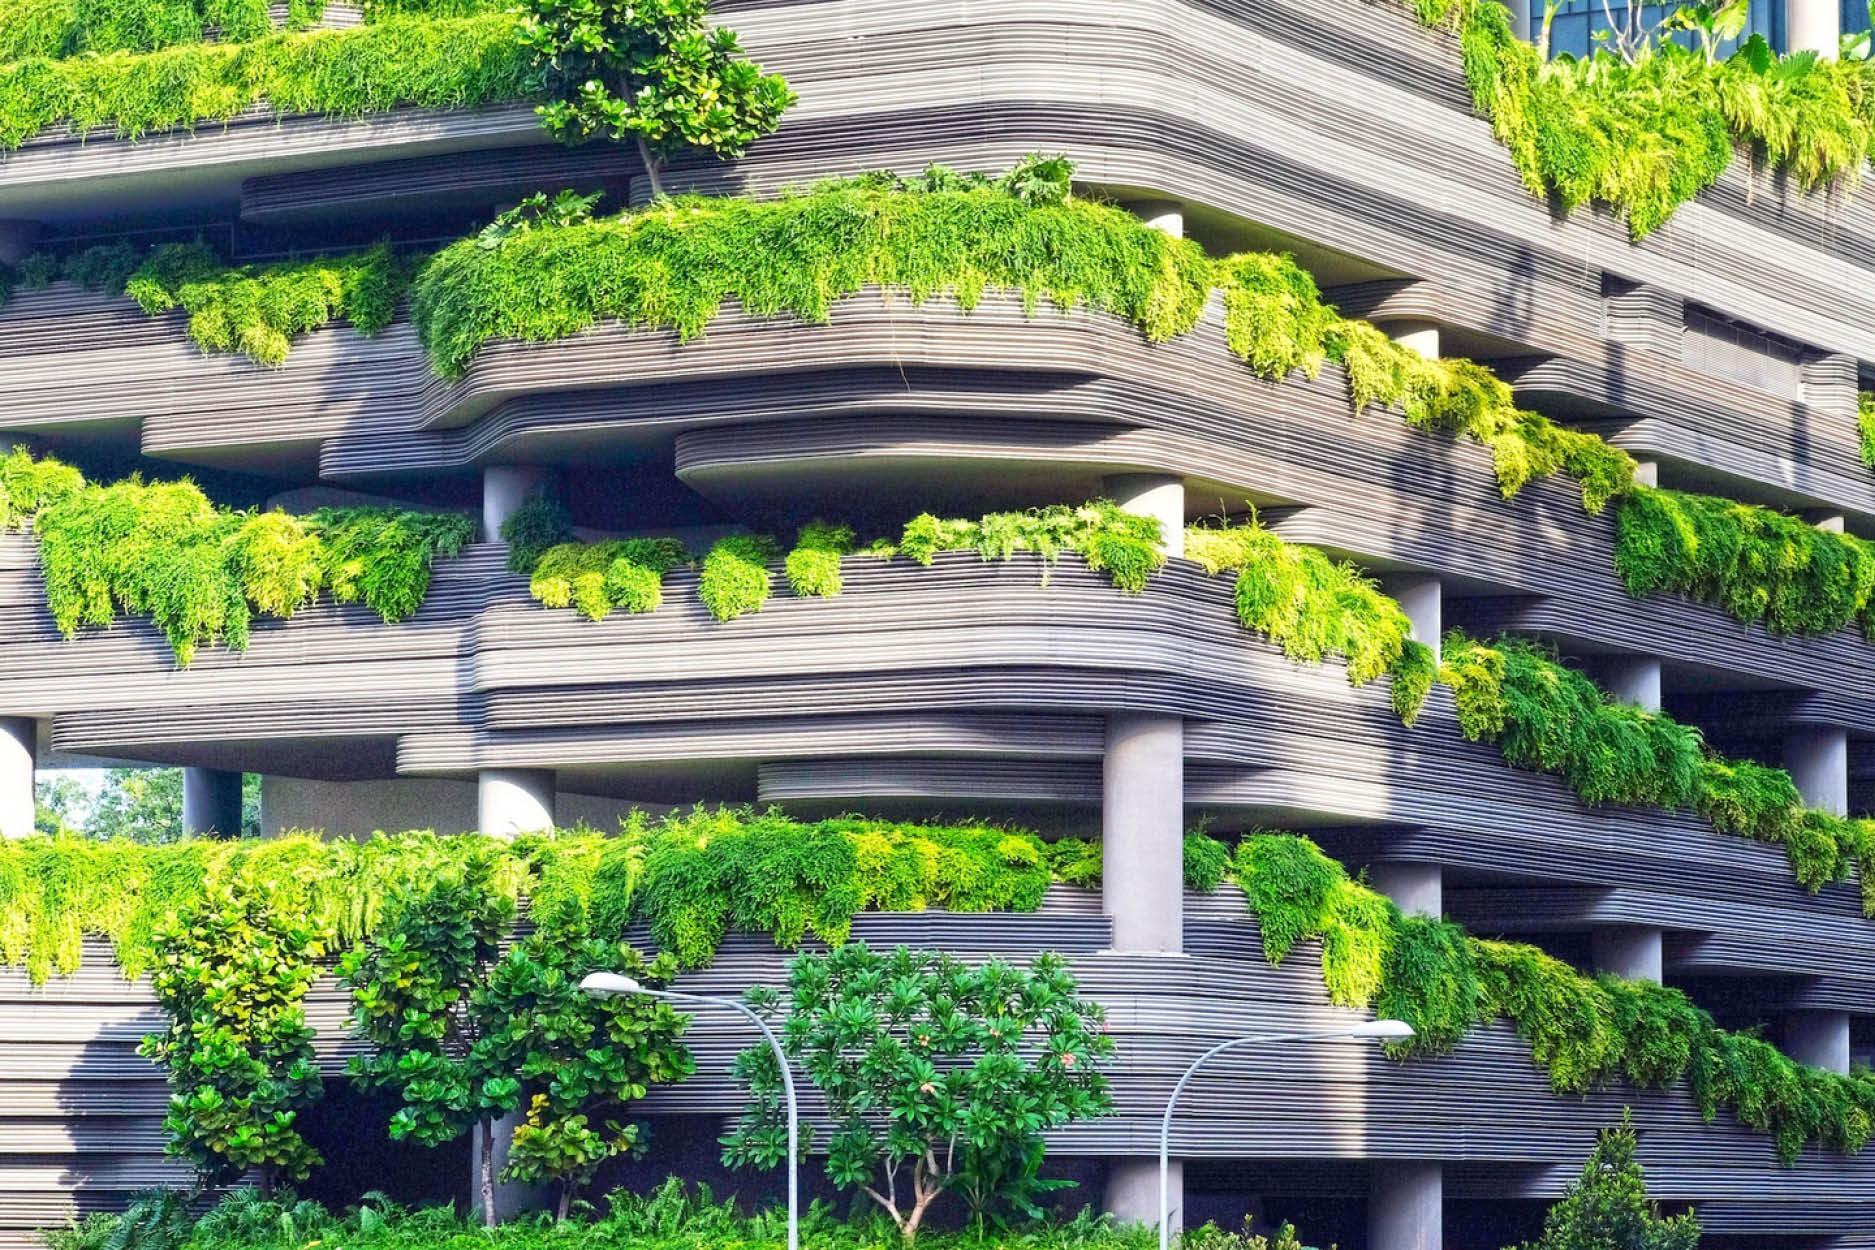 Greening Hong Kong for a Brave New World